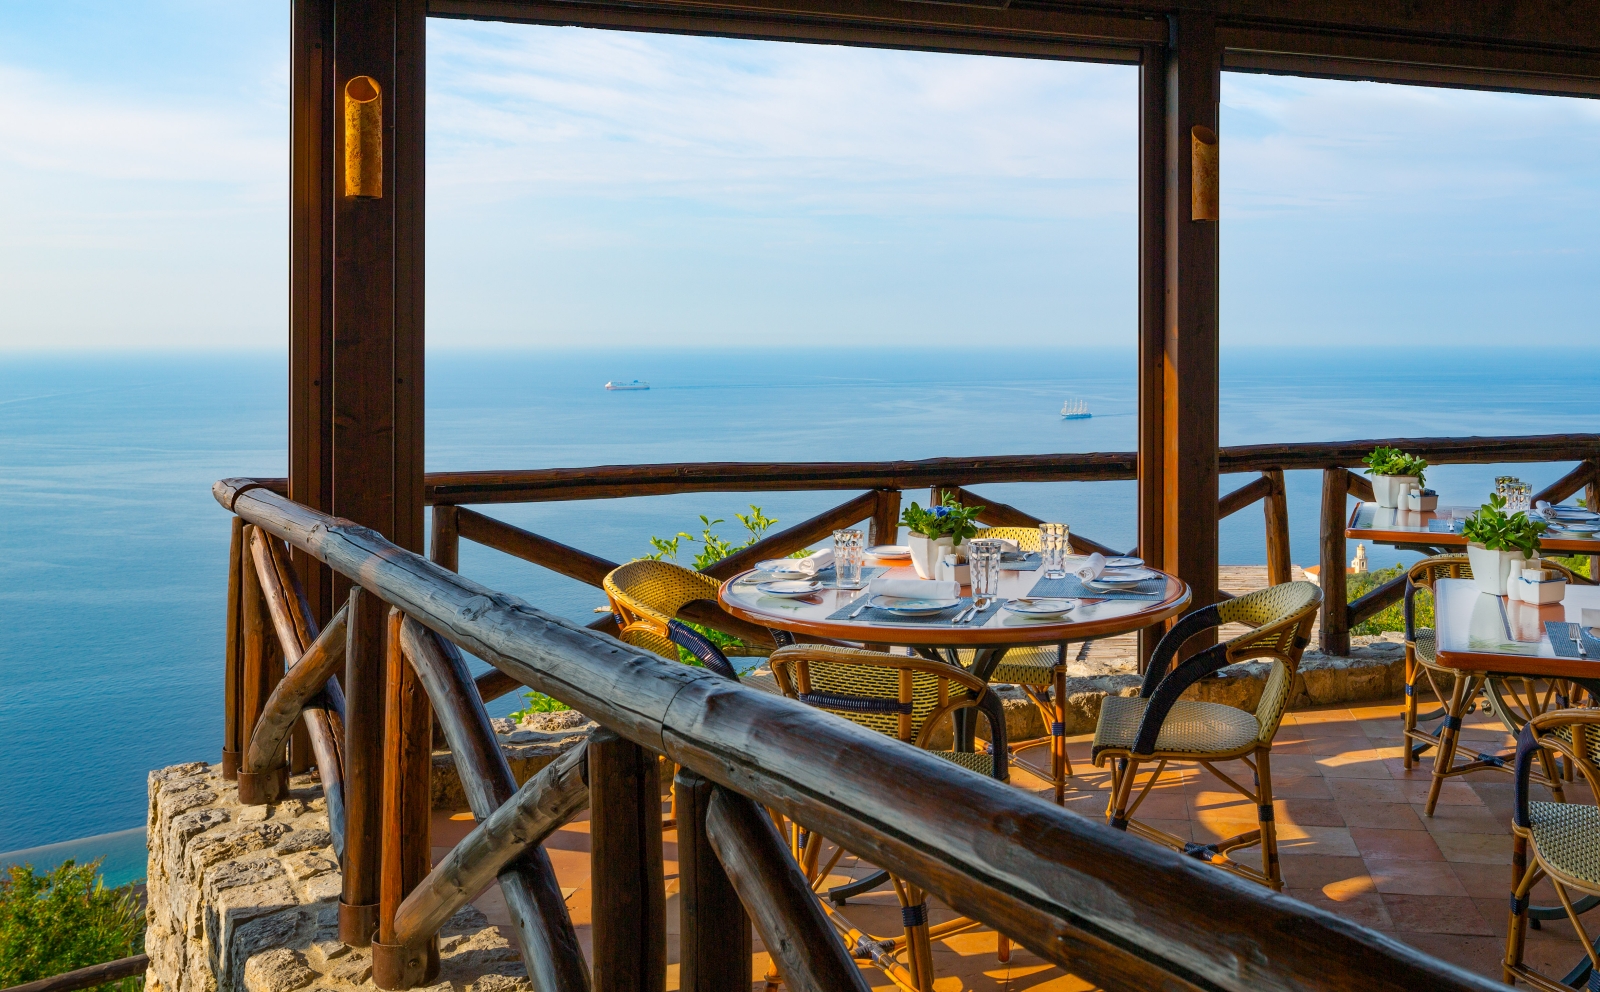 Terrace dining, overlooking the Mediterranean Sea at Monastera Santa Rosa, luxury hotel in Italy